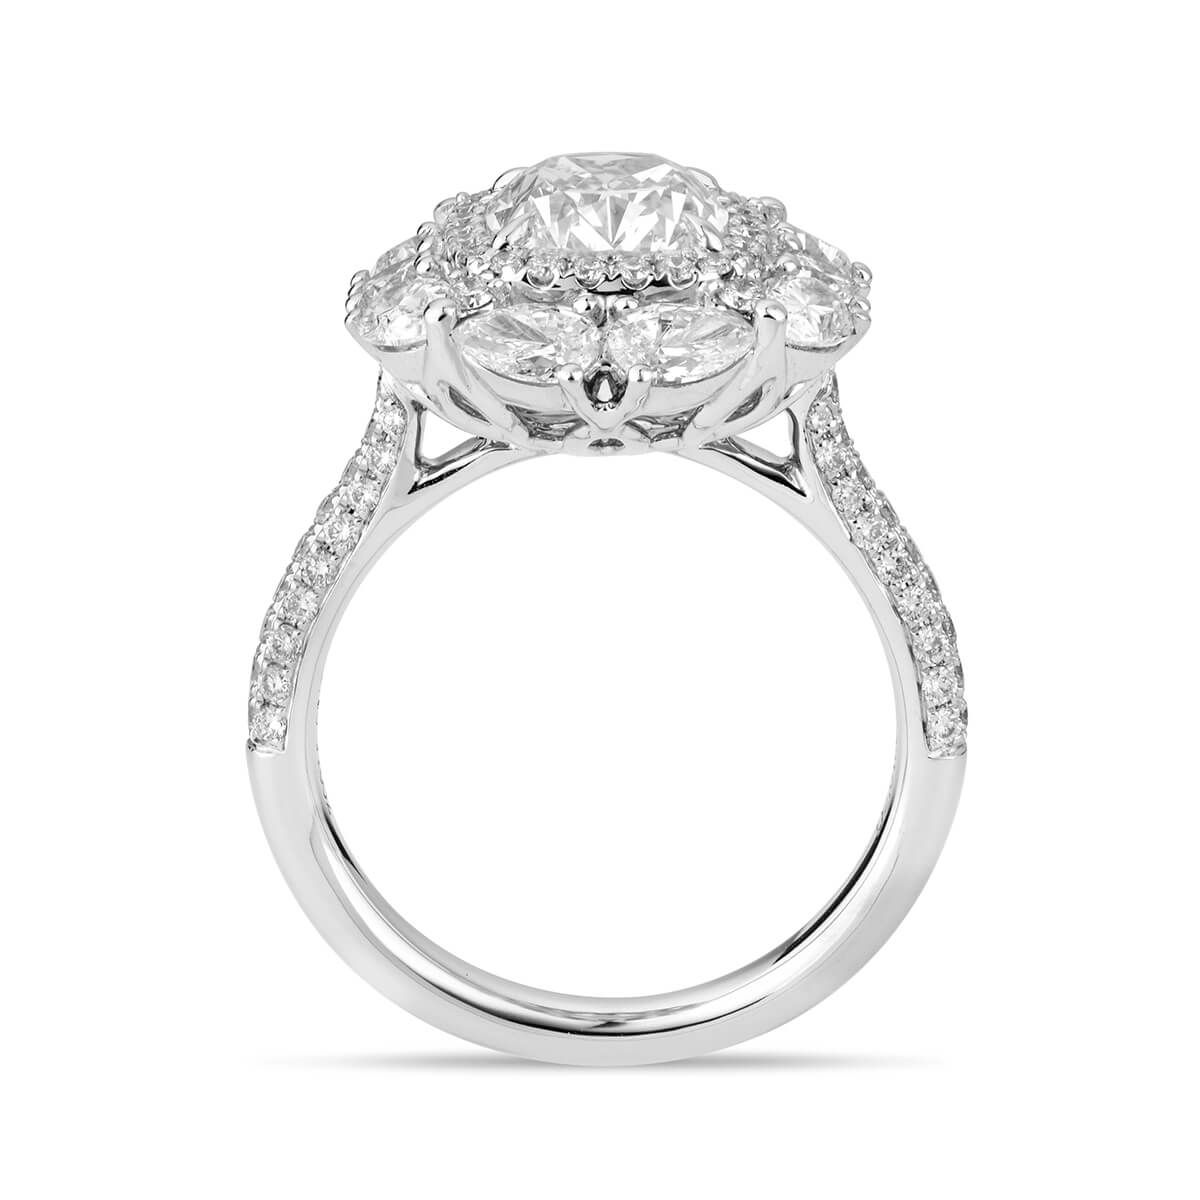  White Diamond Ring, 2.01 Ct. (3.70 Ct. TW), Cushion shape, GIA Certified, 5283551995